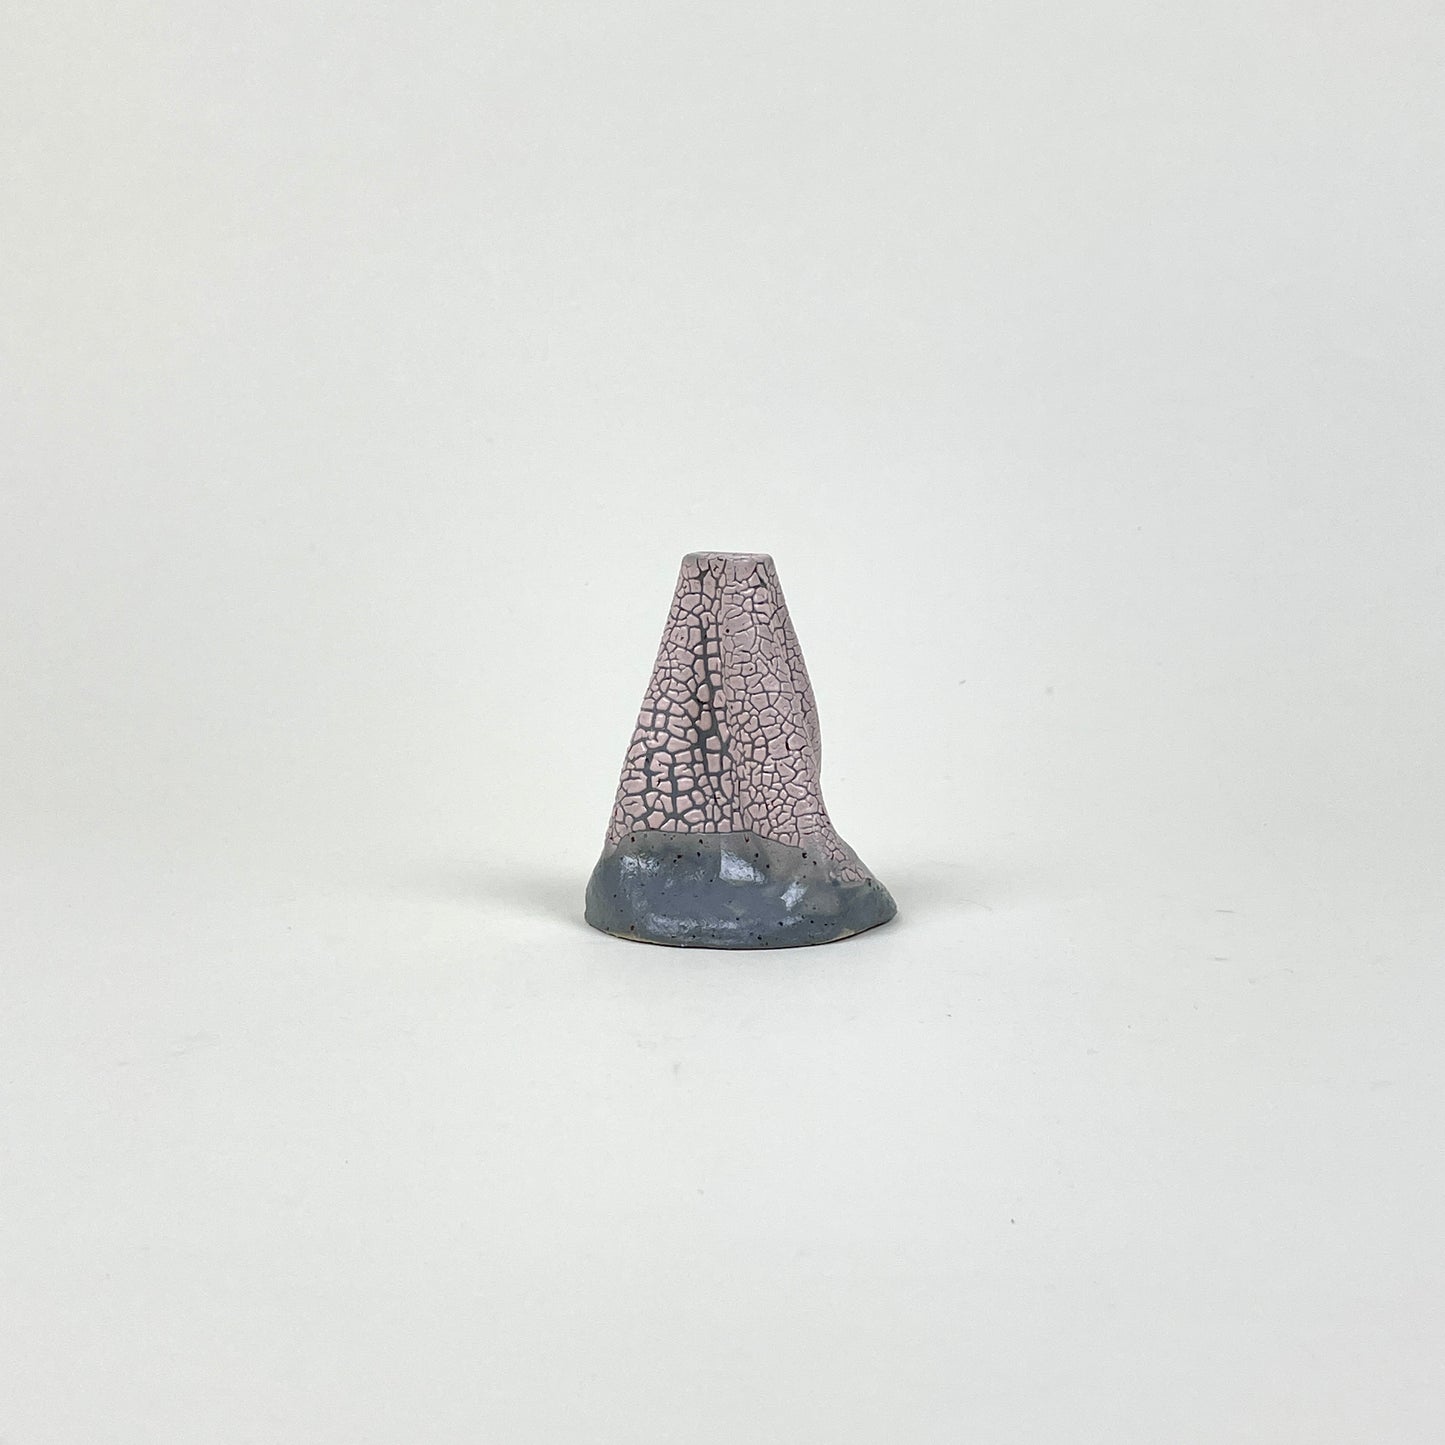 Blueish grey and beige volcano vase (S) by Astrid Öhman.